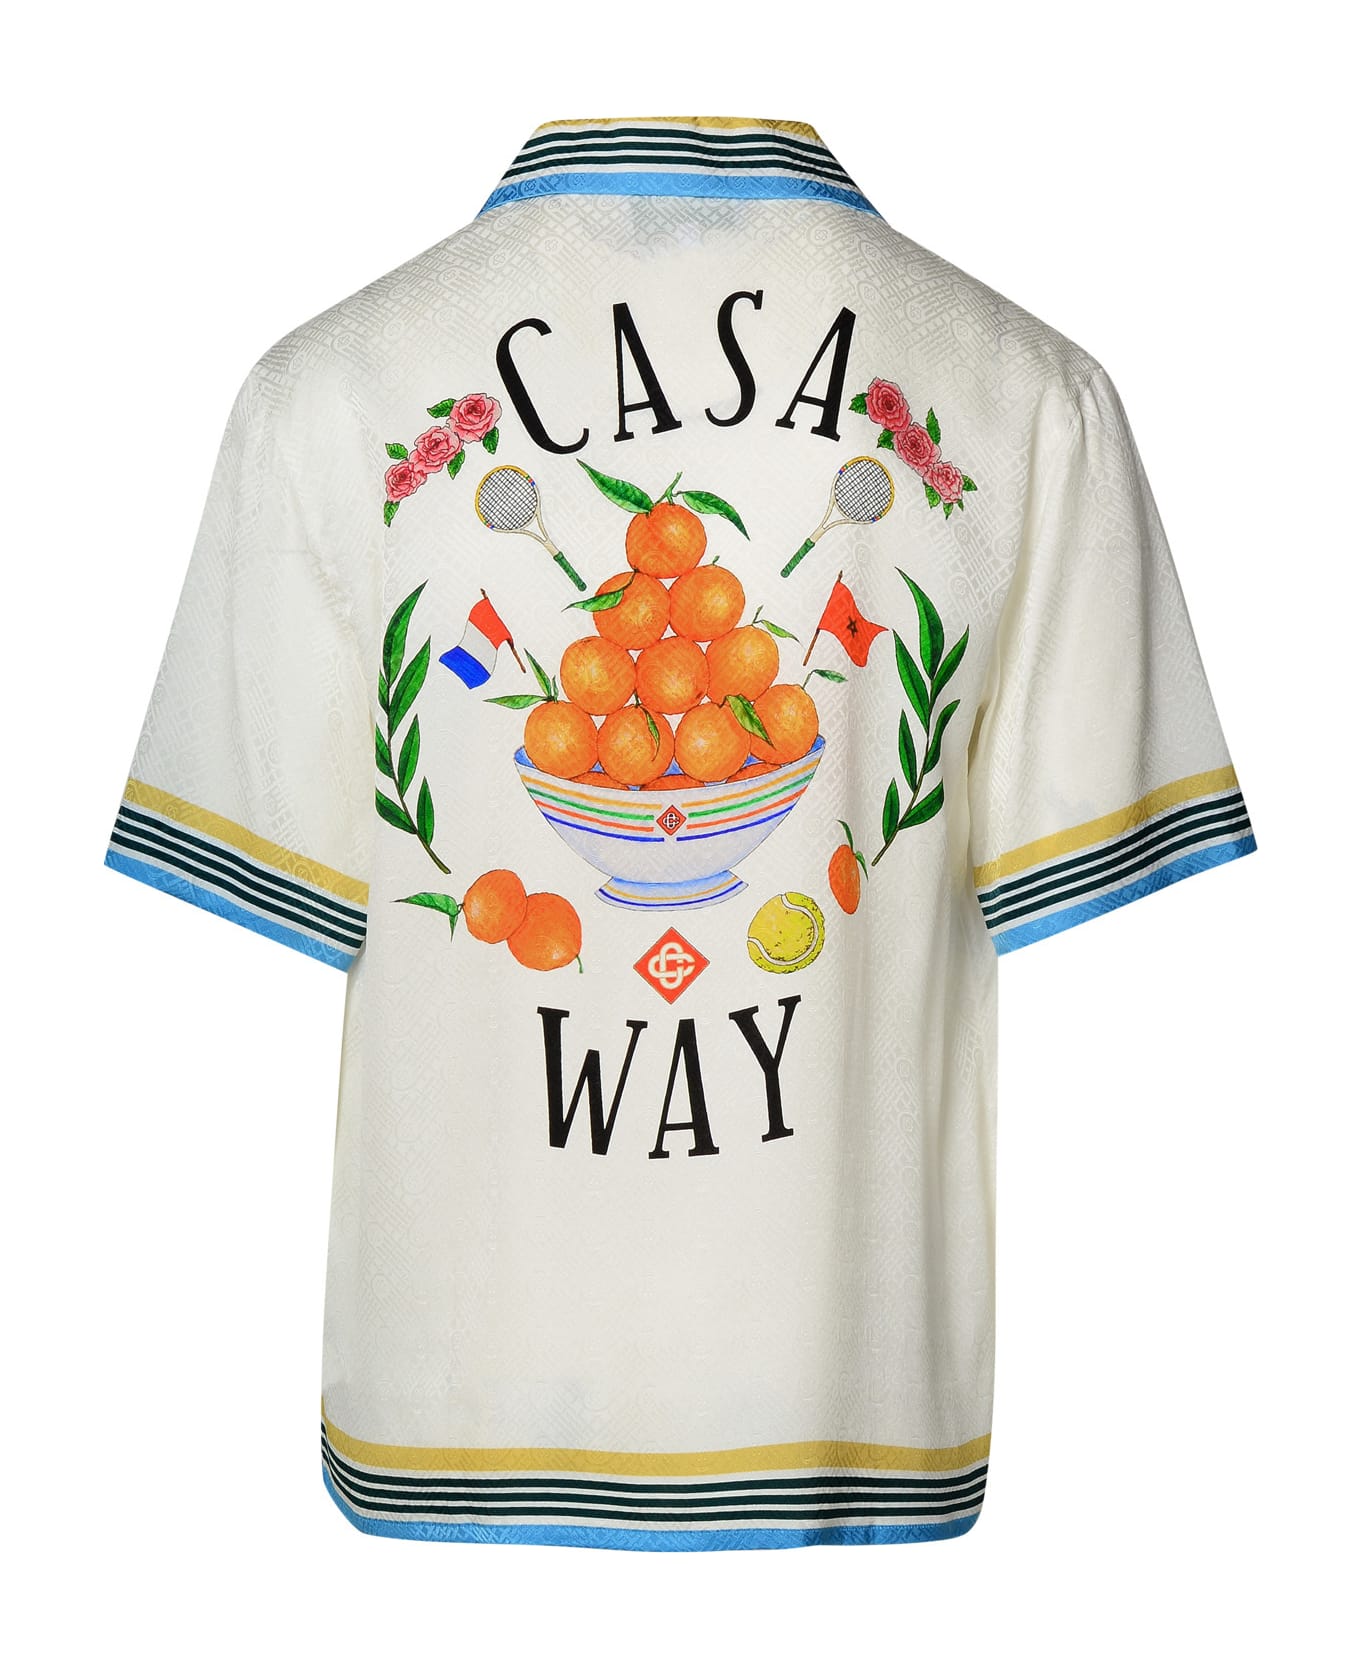 Casablanca White Silk Shirt - Casa Way シャツ